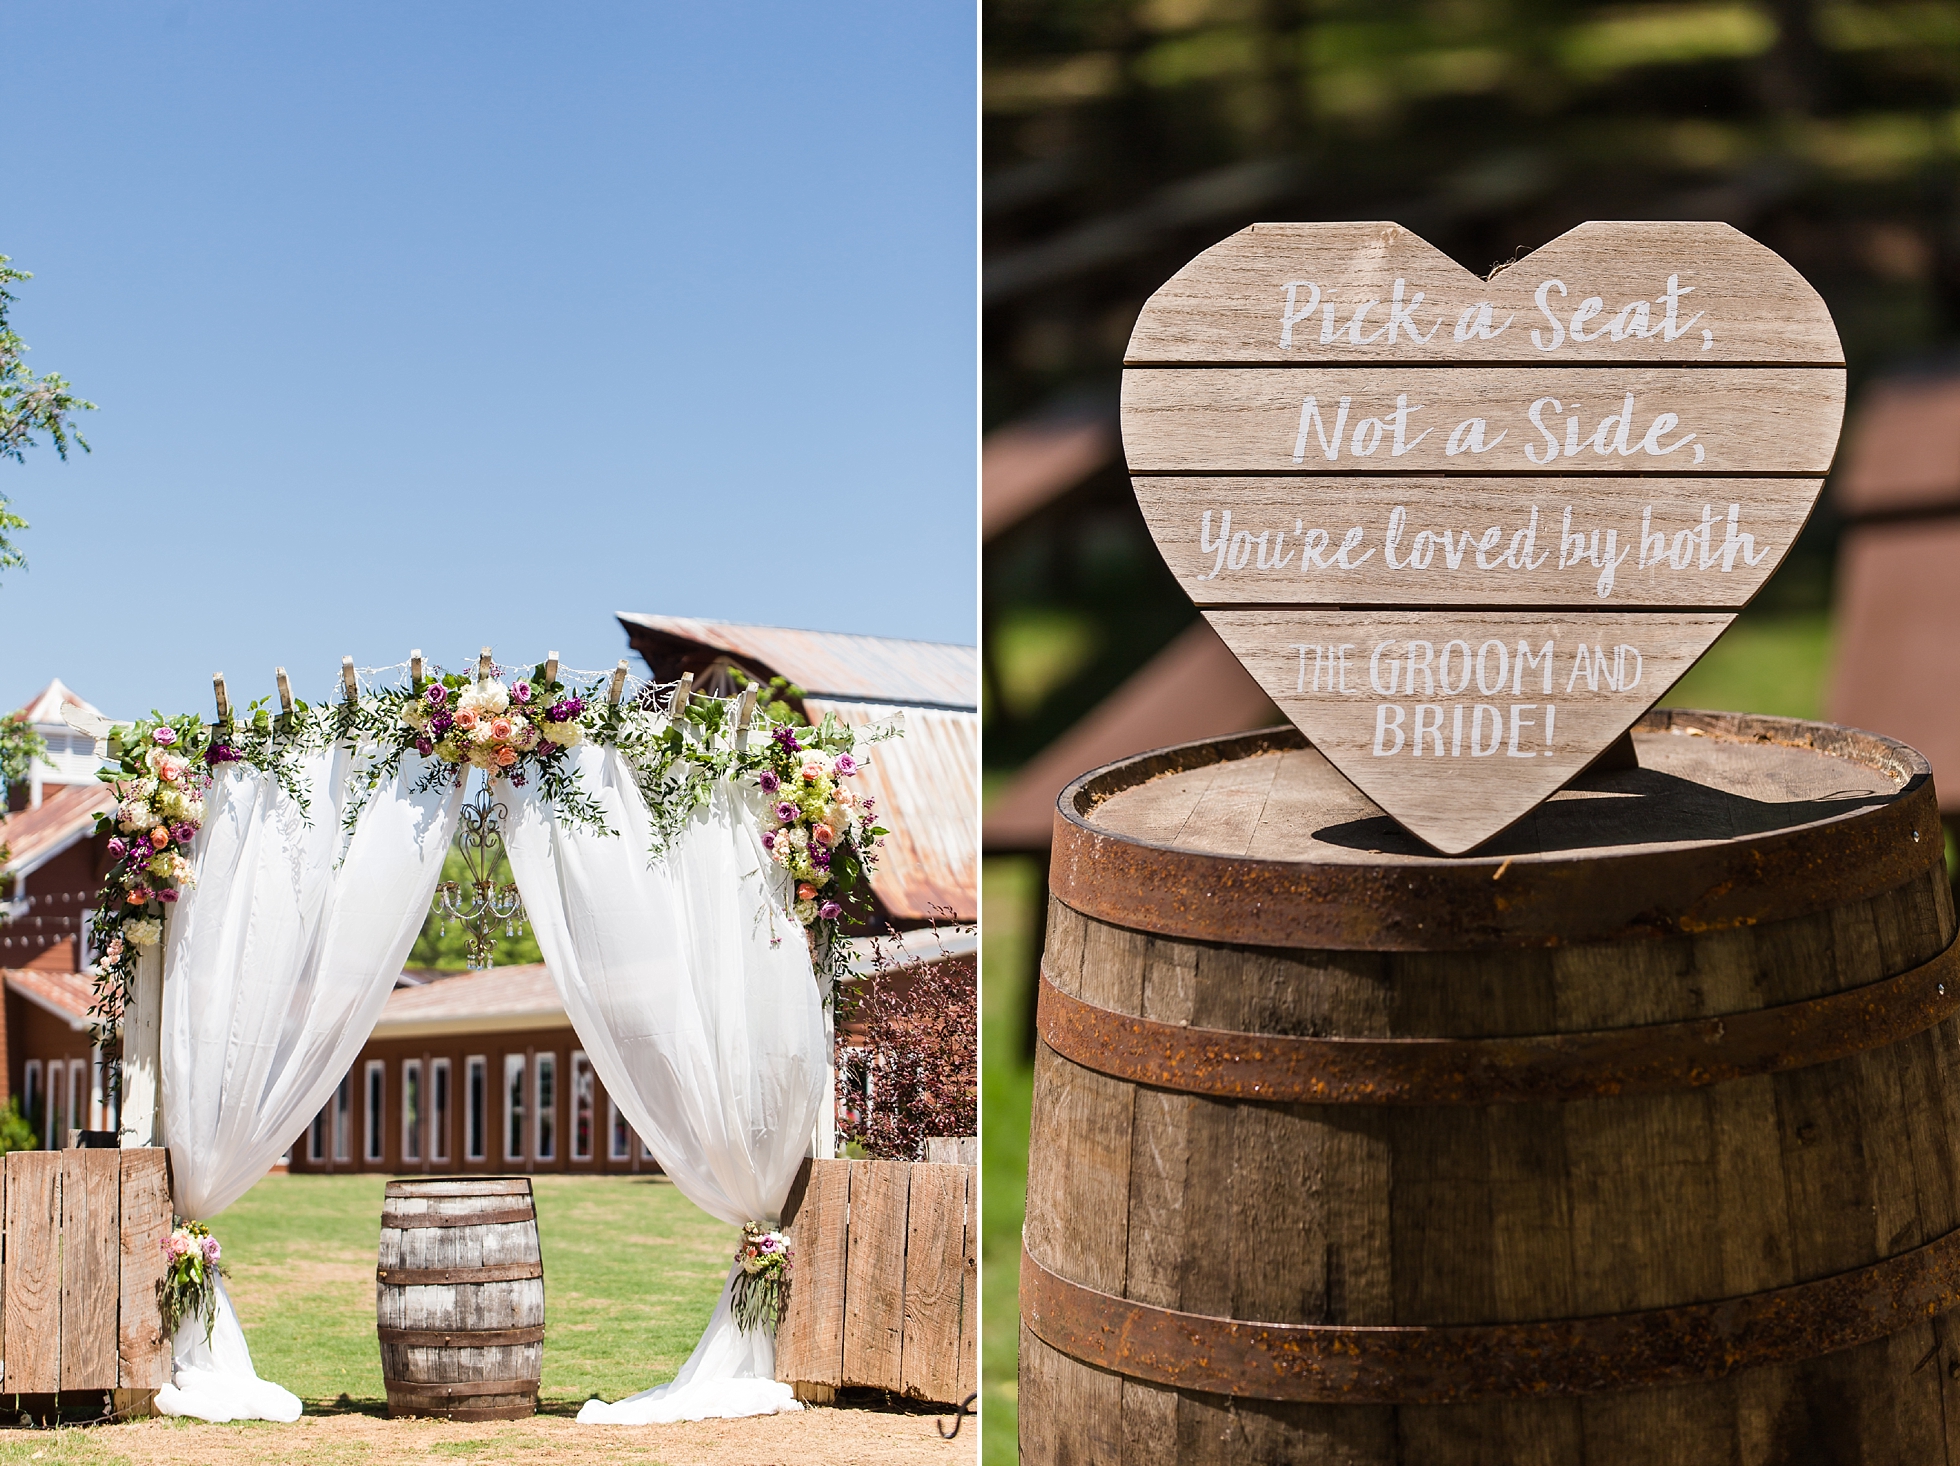 9 oaks farm barn wedding venue